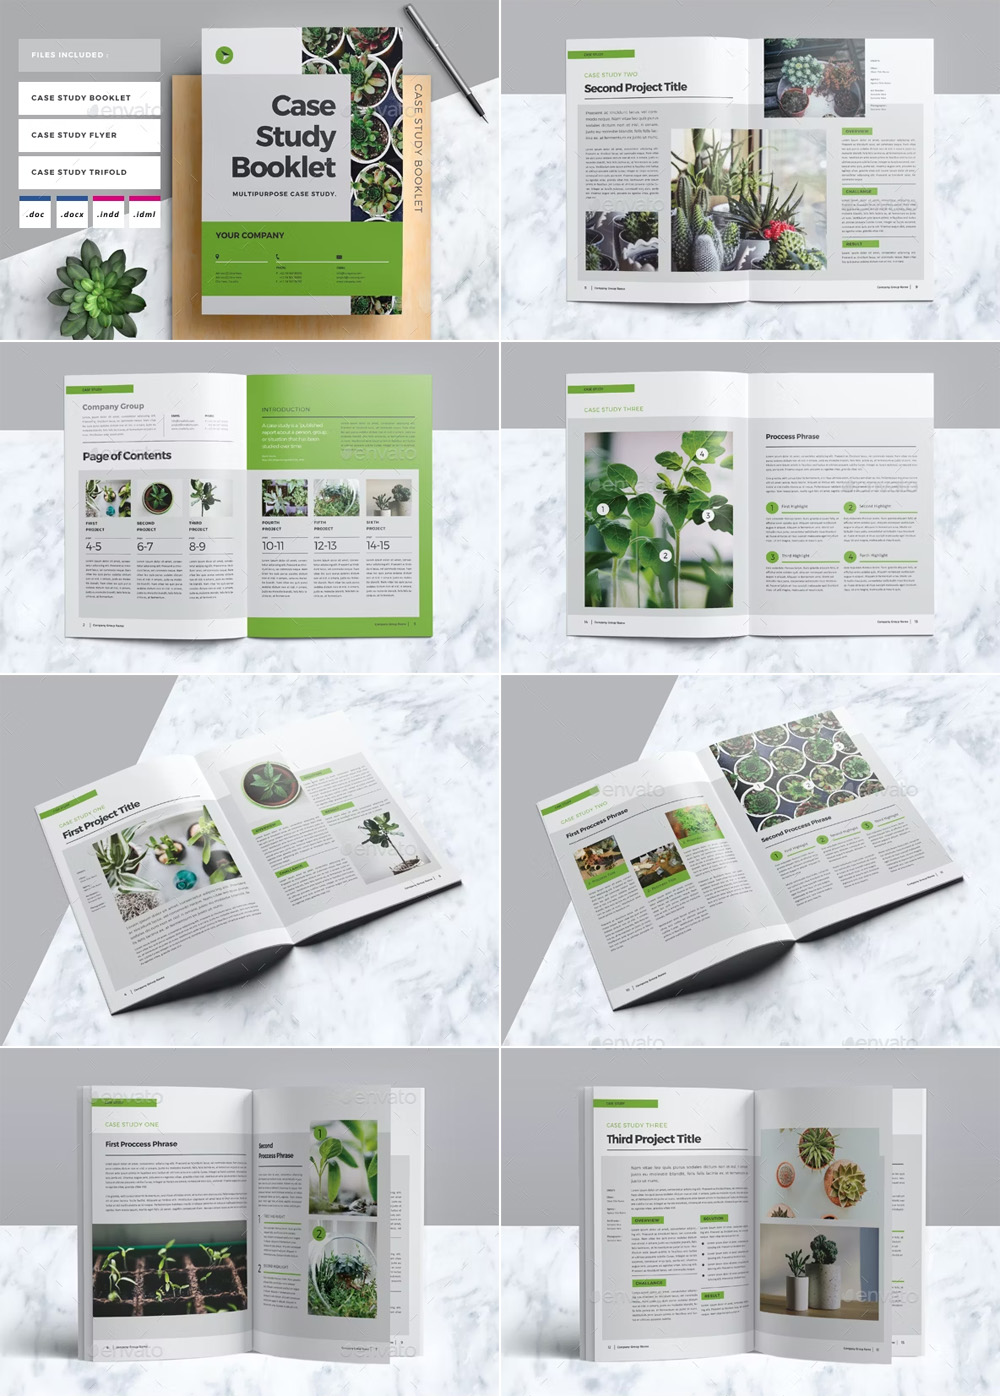 Case Study Booklet Design